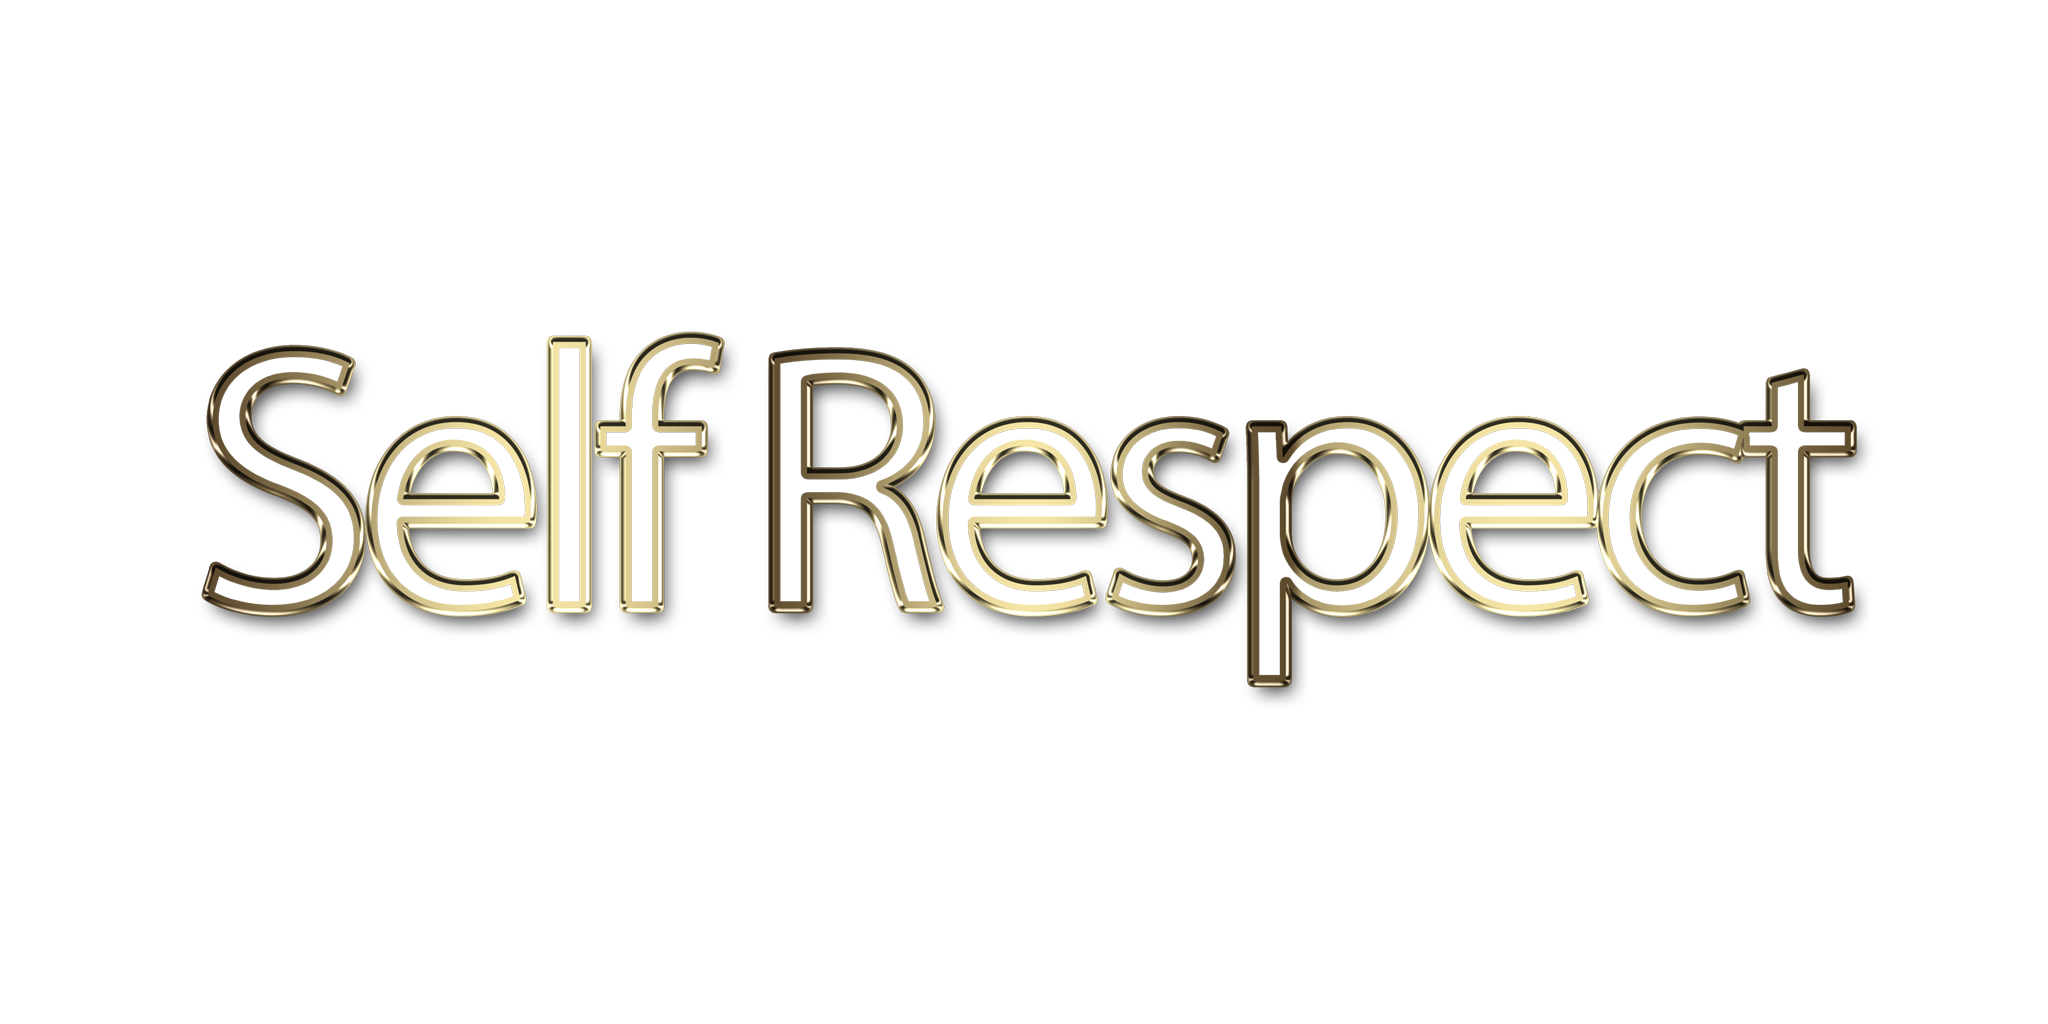 Selfrespect png, word Selfrespect png, Selfrespect word png, Selfrespect text png, Selfrespect letters png, Selfrespect word art typography PNG images, transparent png